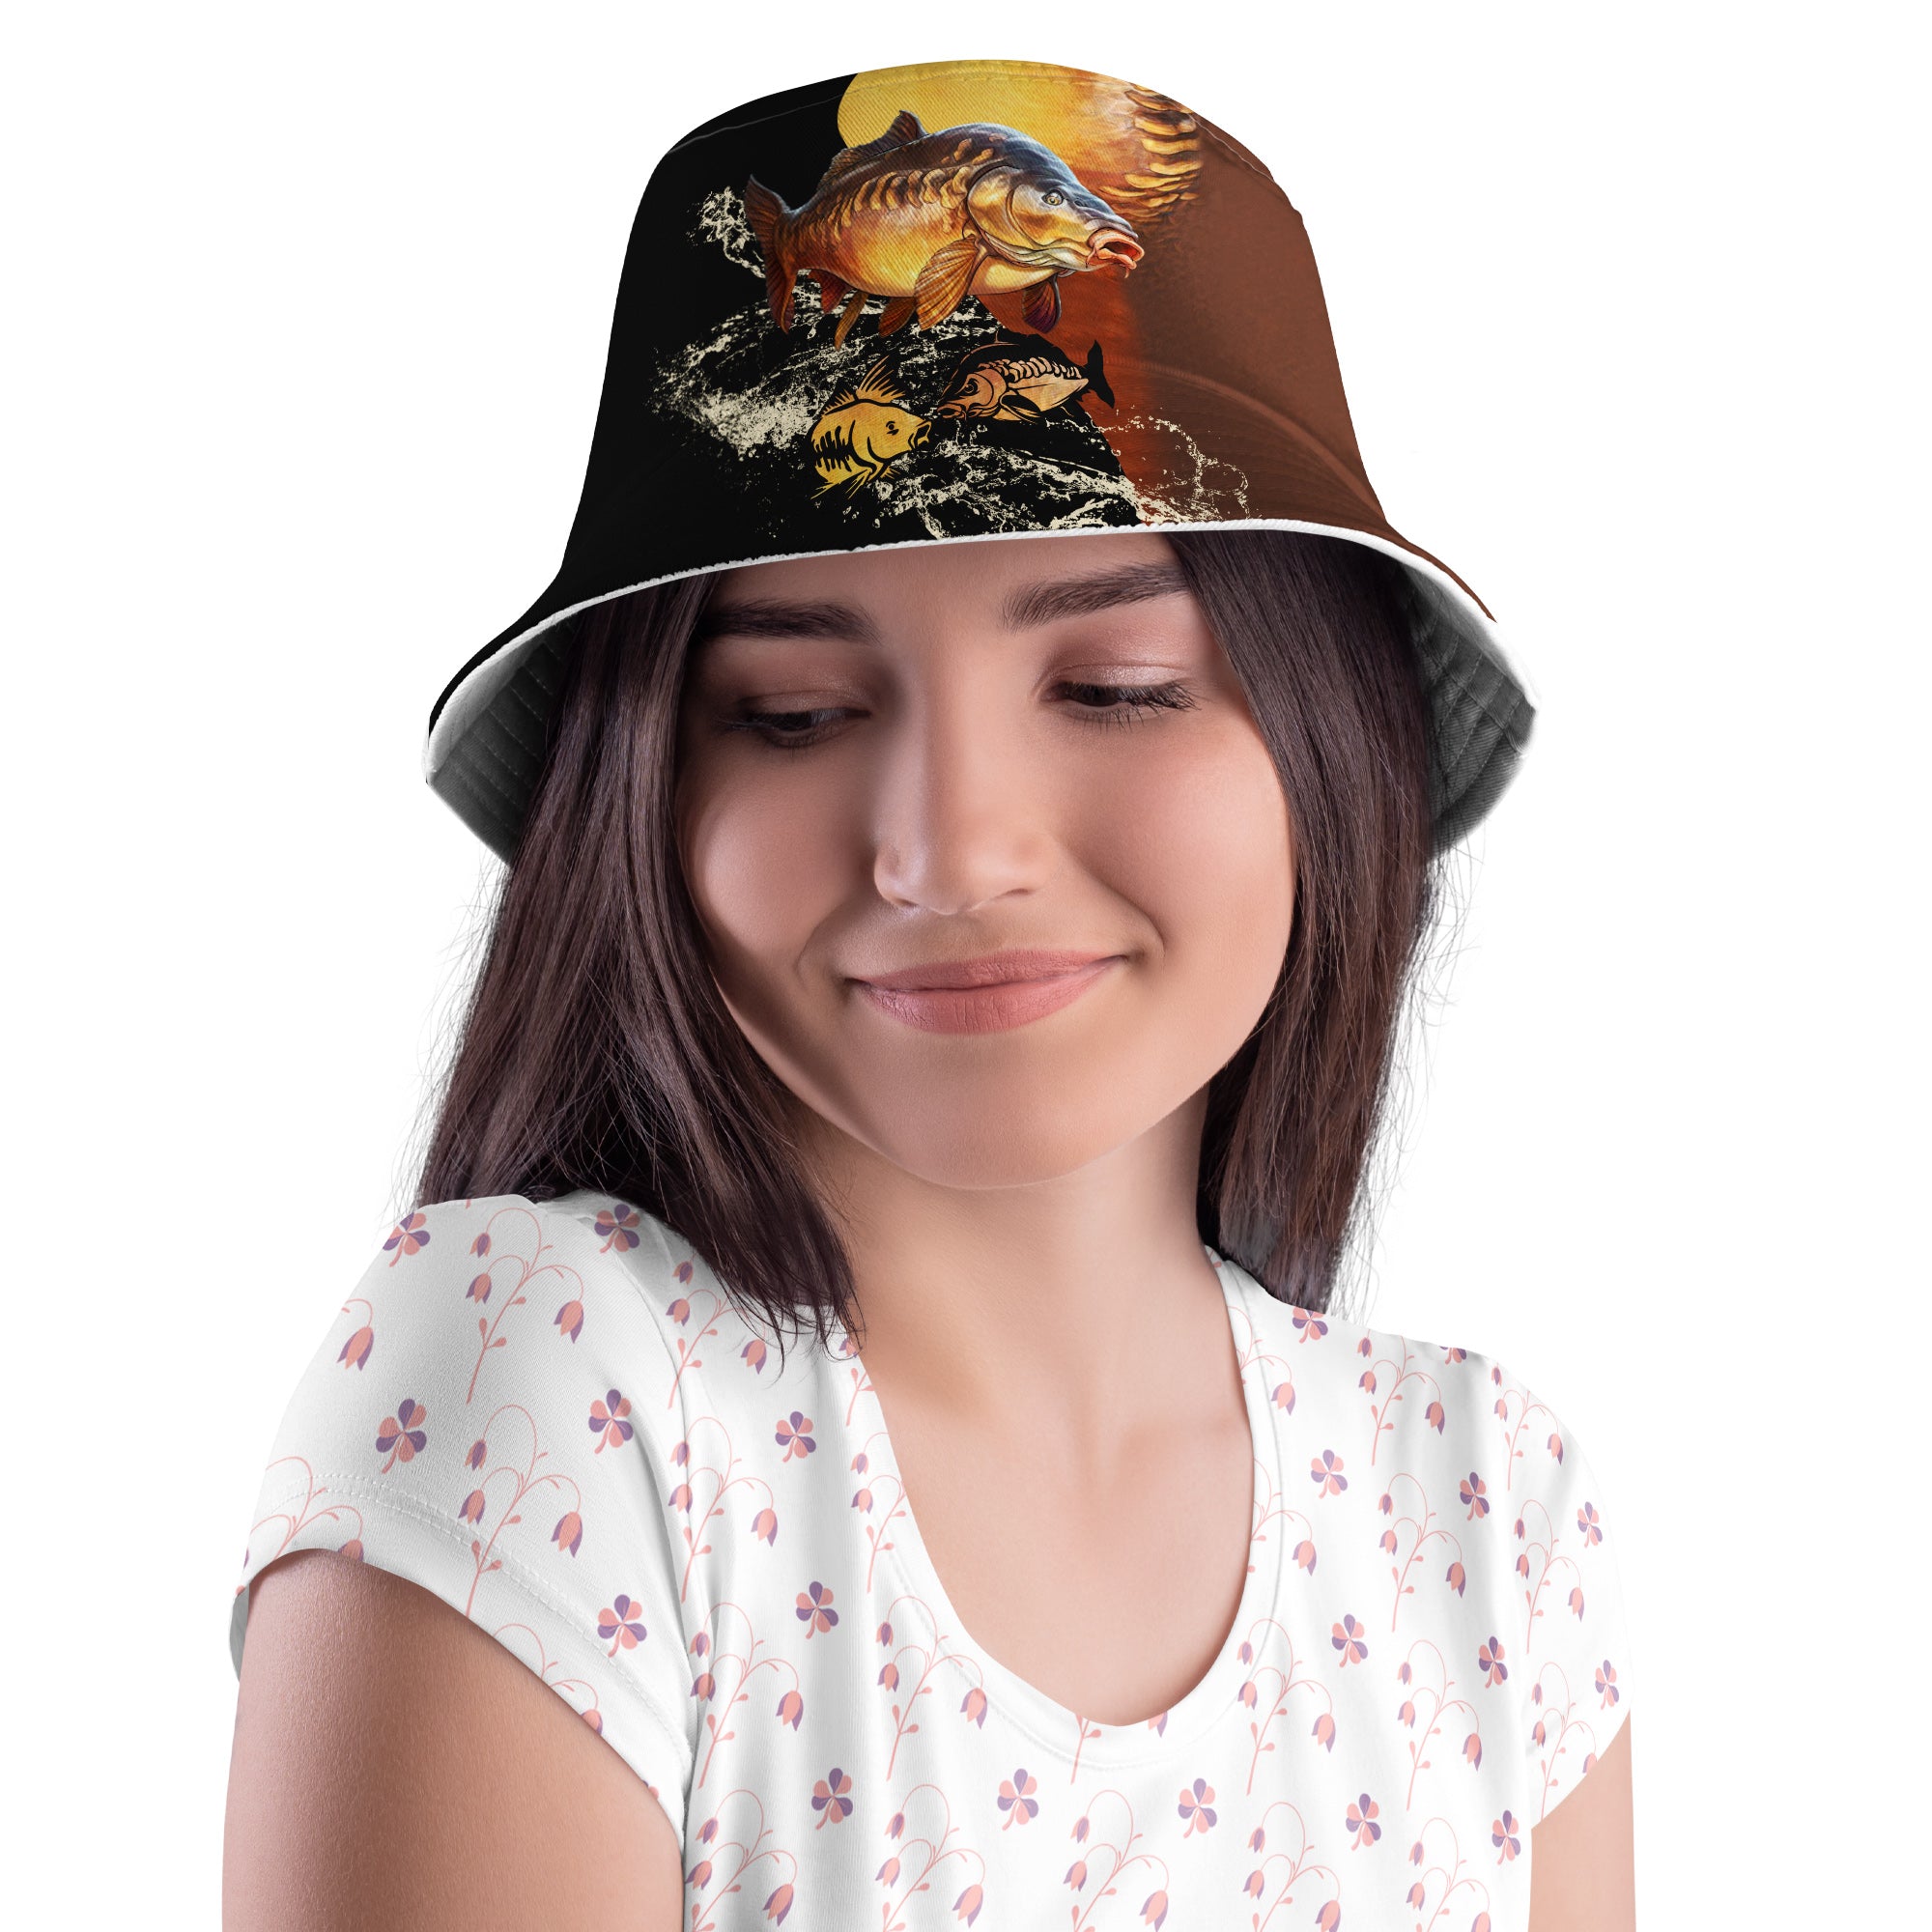 Fishing Bucket Hat